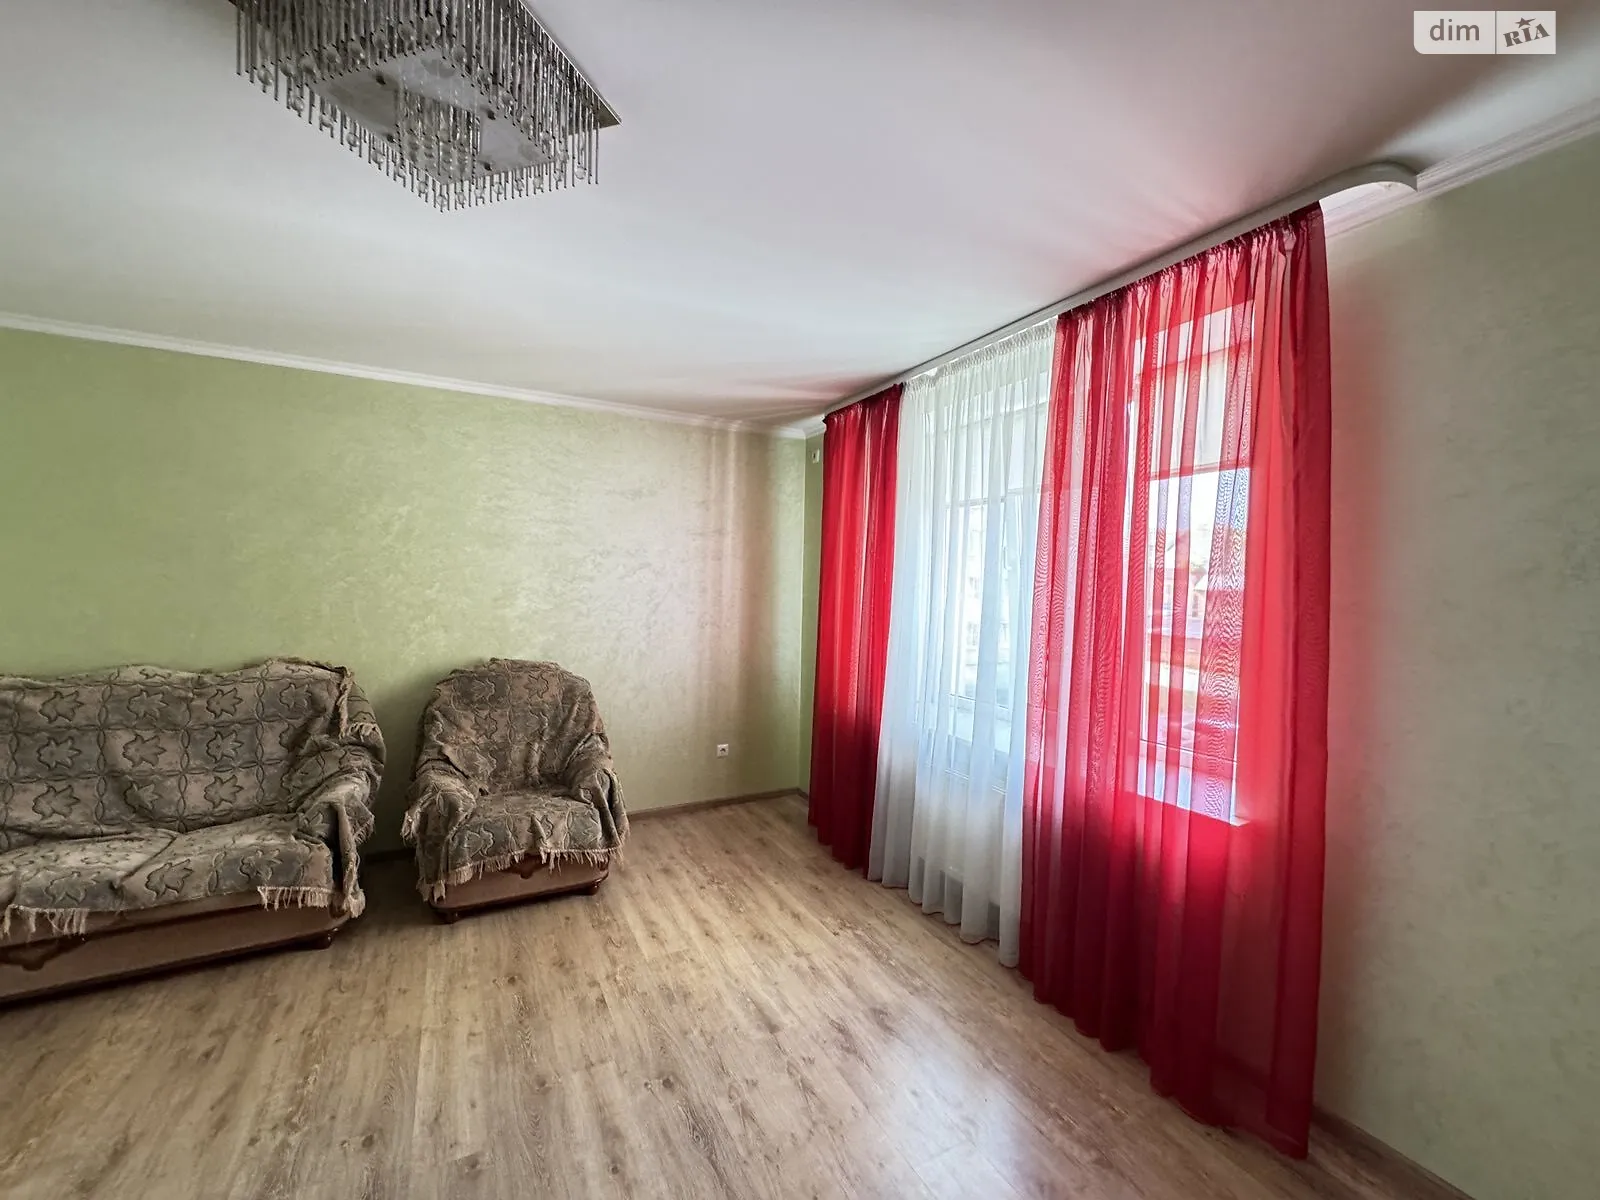 3-кімнатна квартира 92.3 кв. м у Луцьку, цена: 85000 $